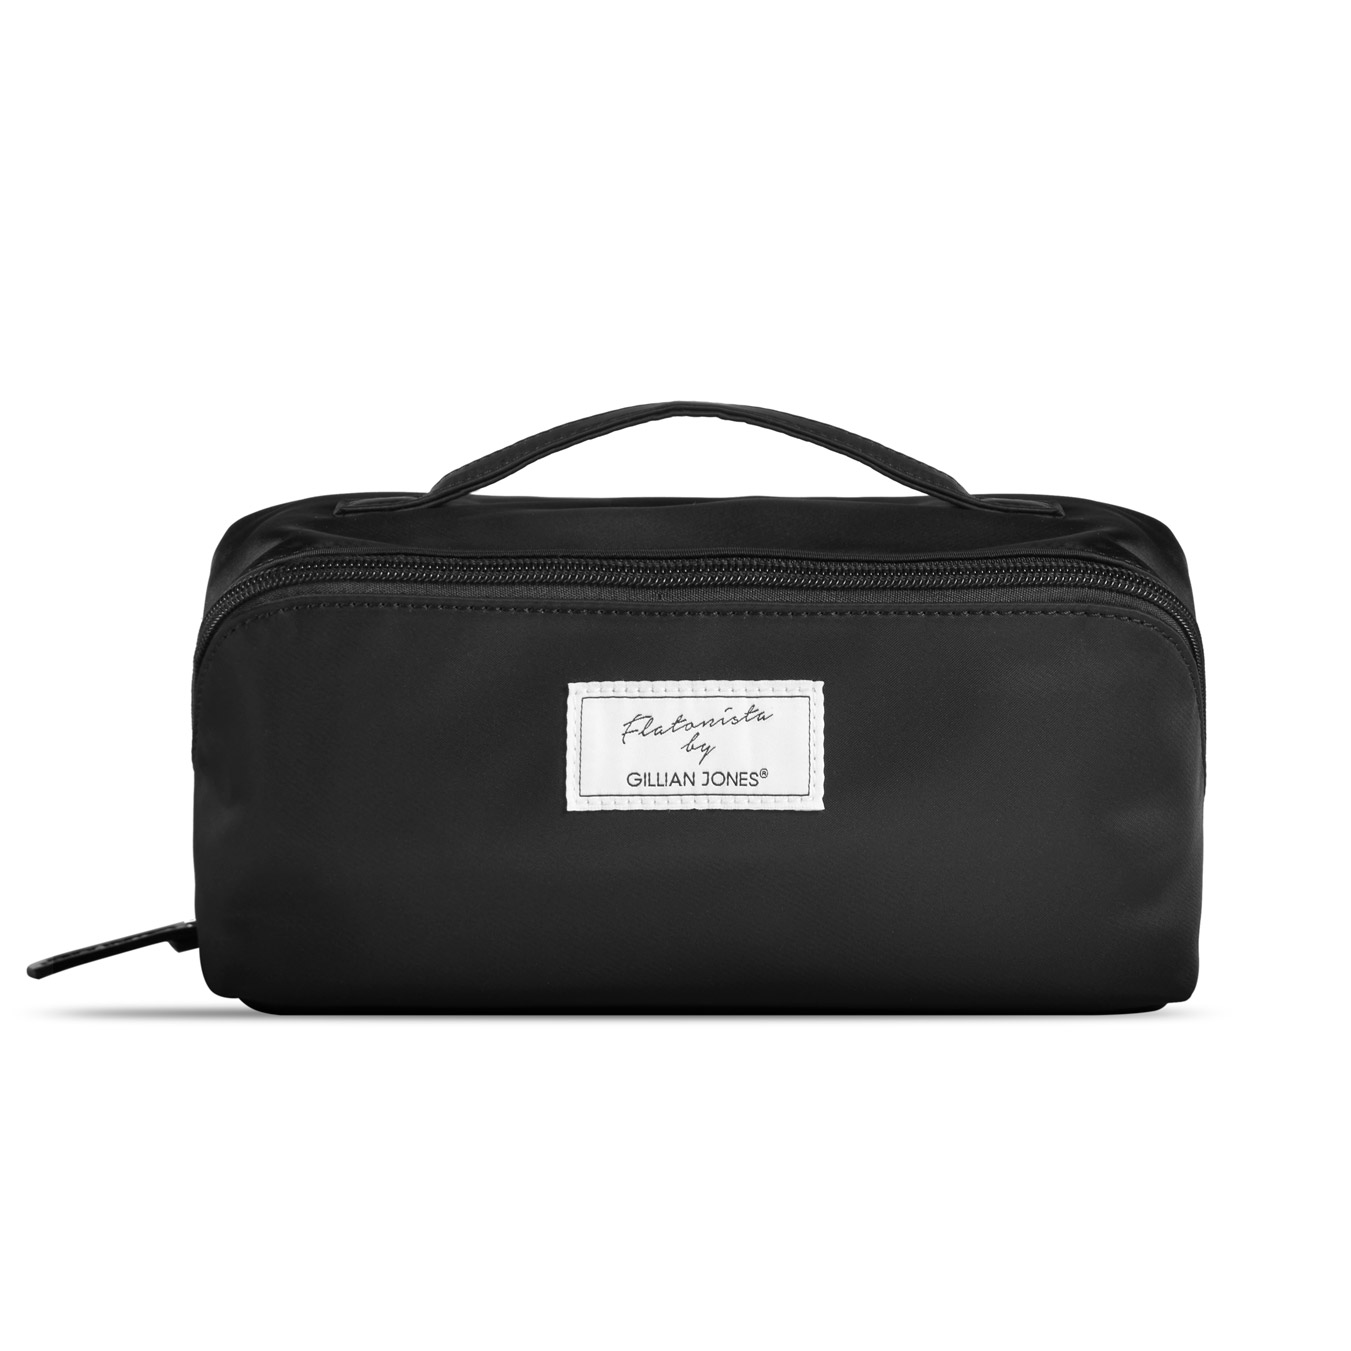 Buy Gillian Jones - Easypack Bag Toiletry Bag Black - Black - Free shipping